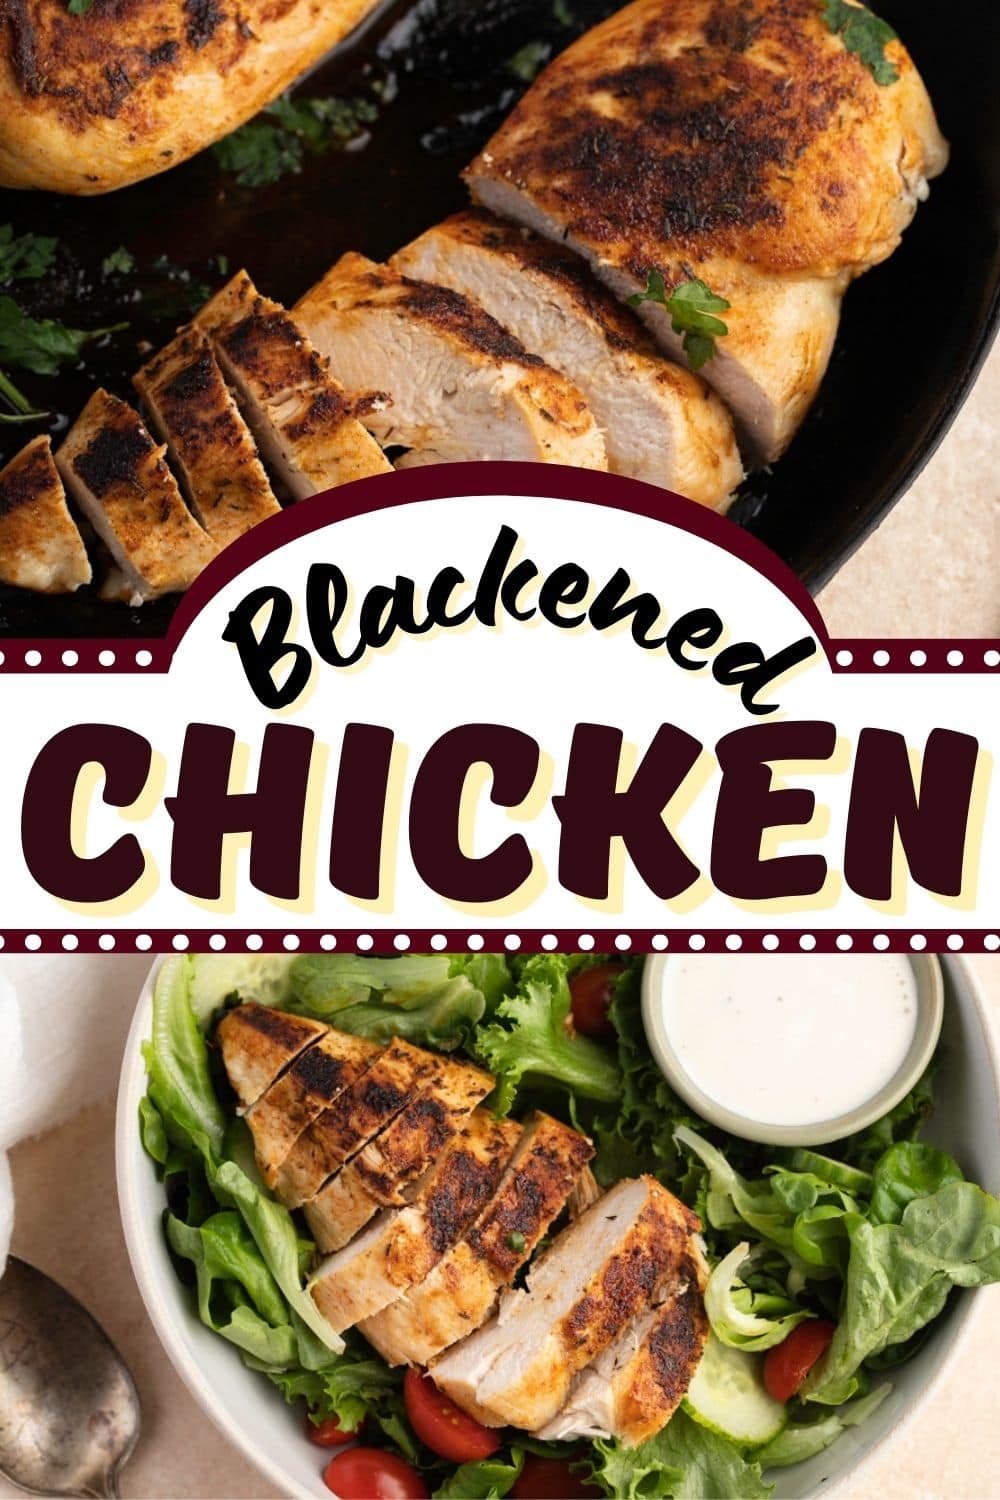 Blackened Chicken